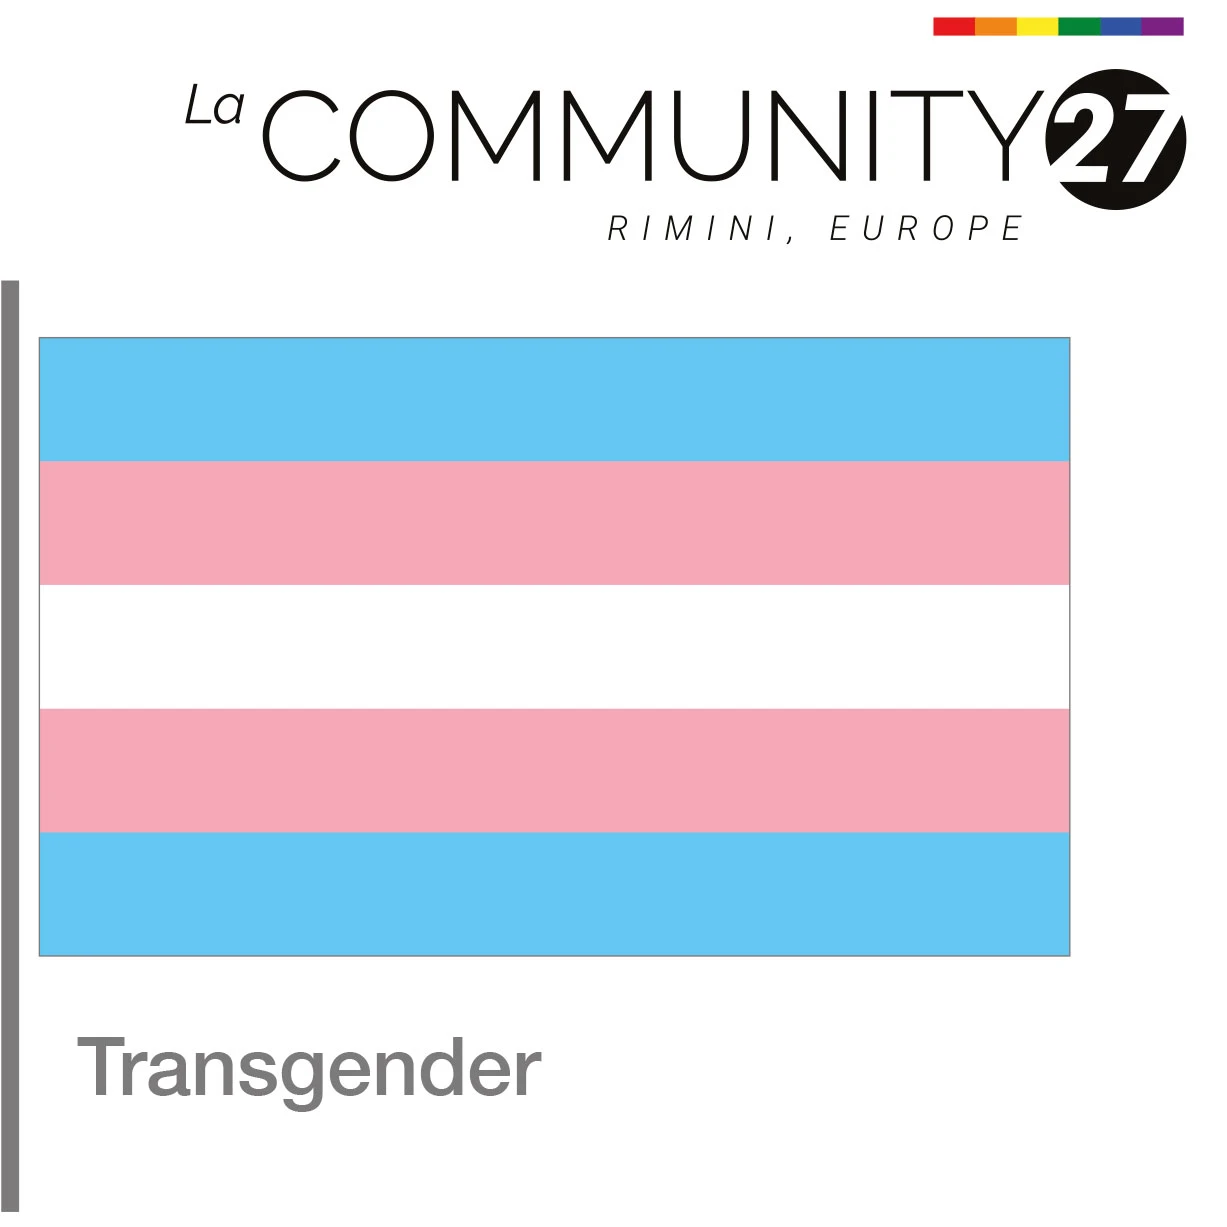 Transgender - bandiera LGBTQ in uso - La Communty 27